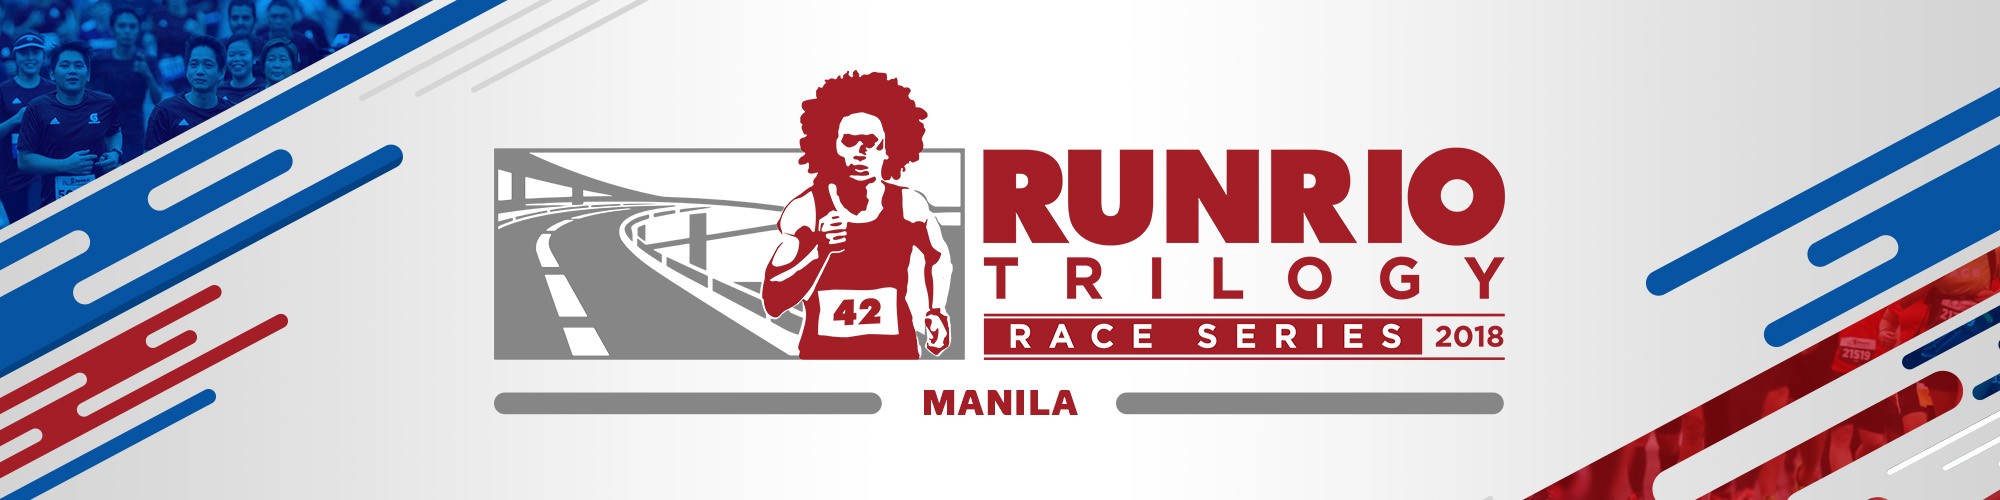 RUNRIO Trilogy Manila leg 2